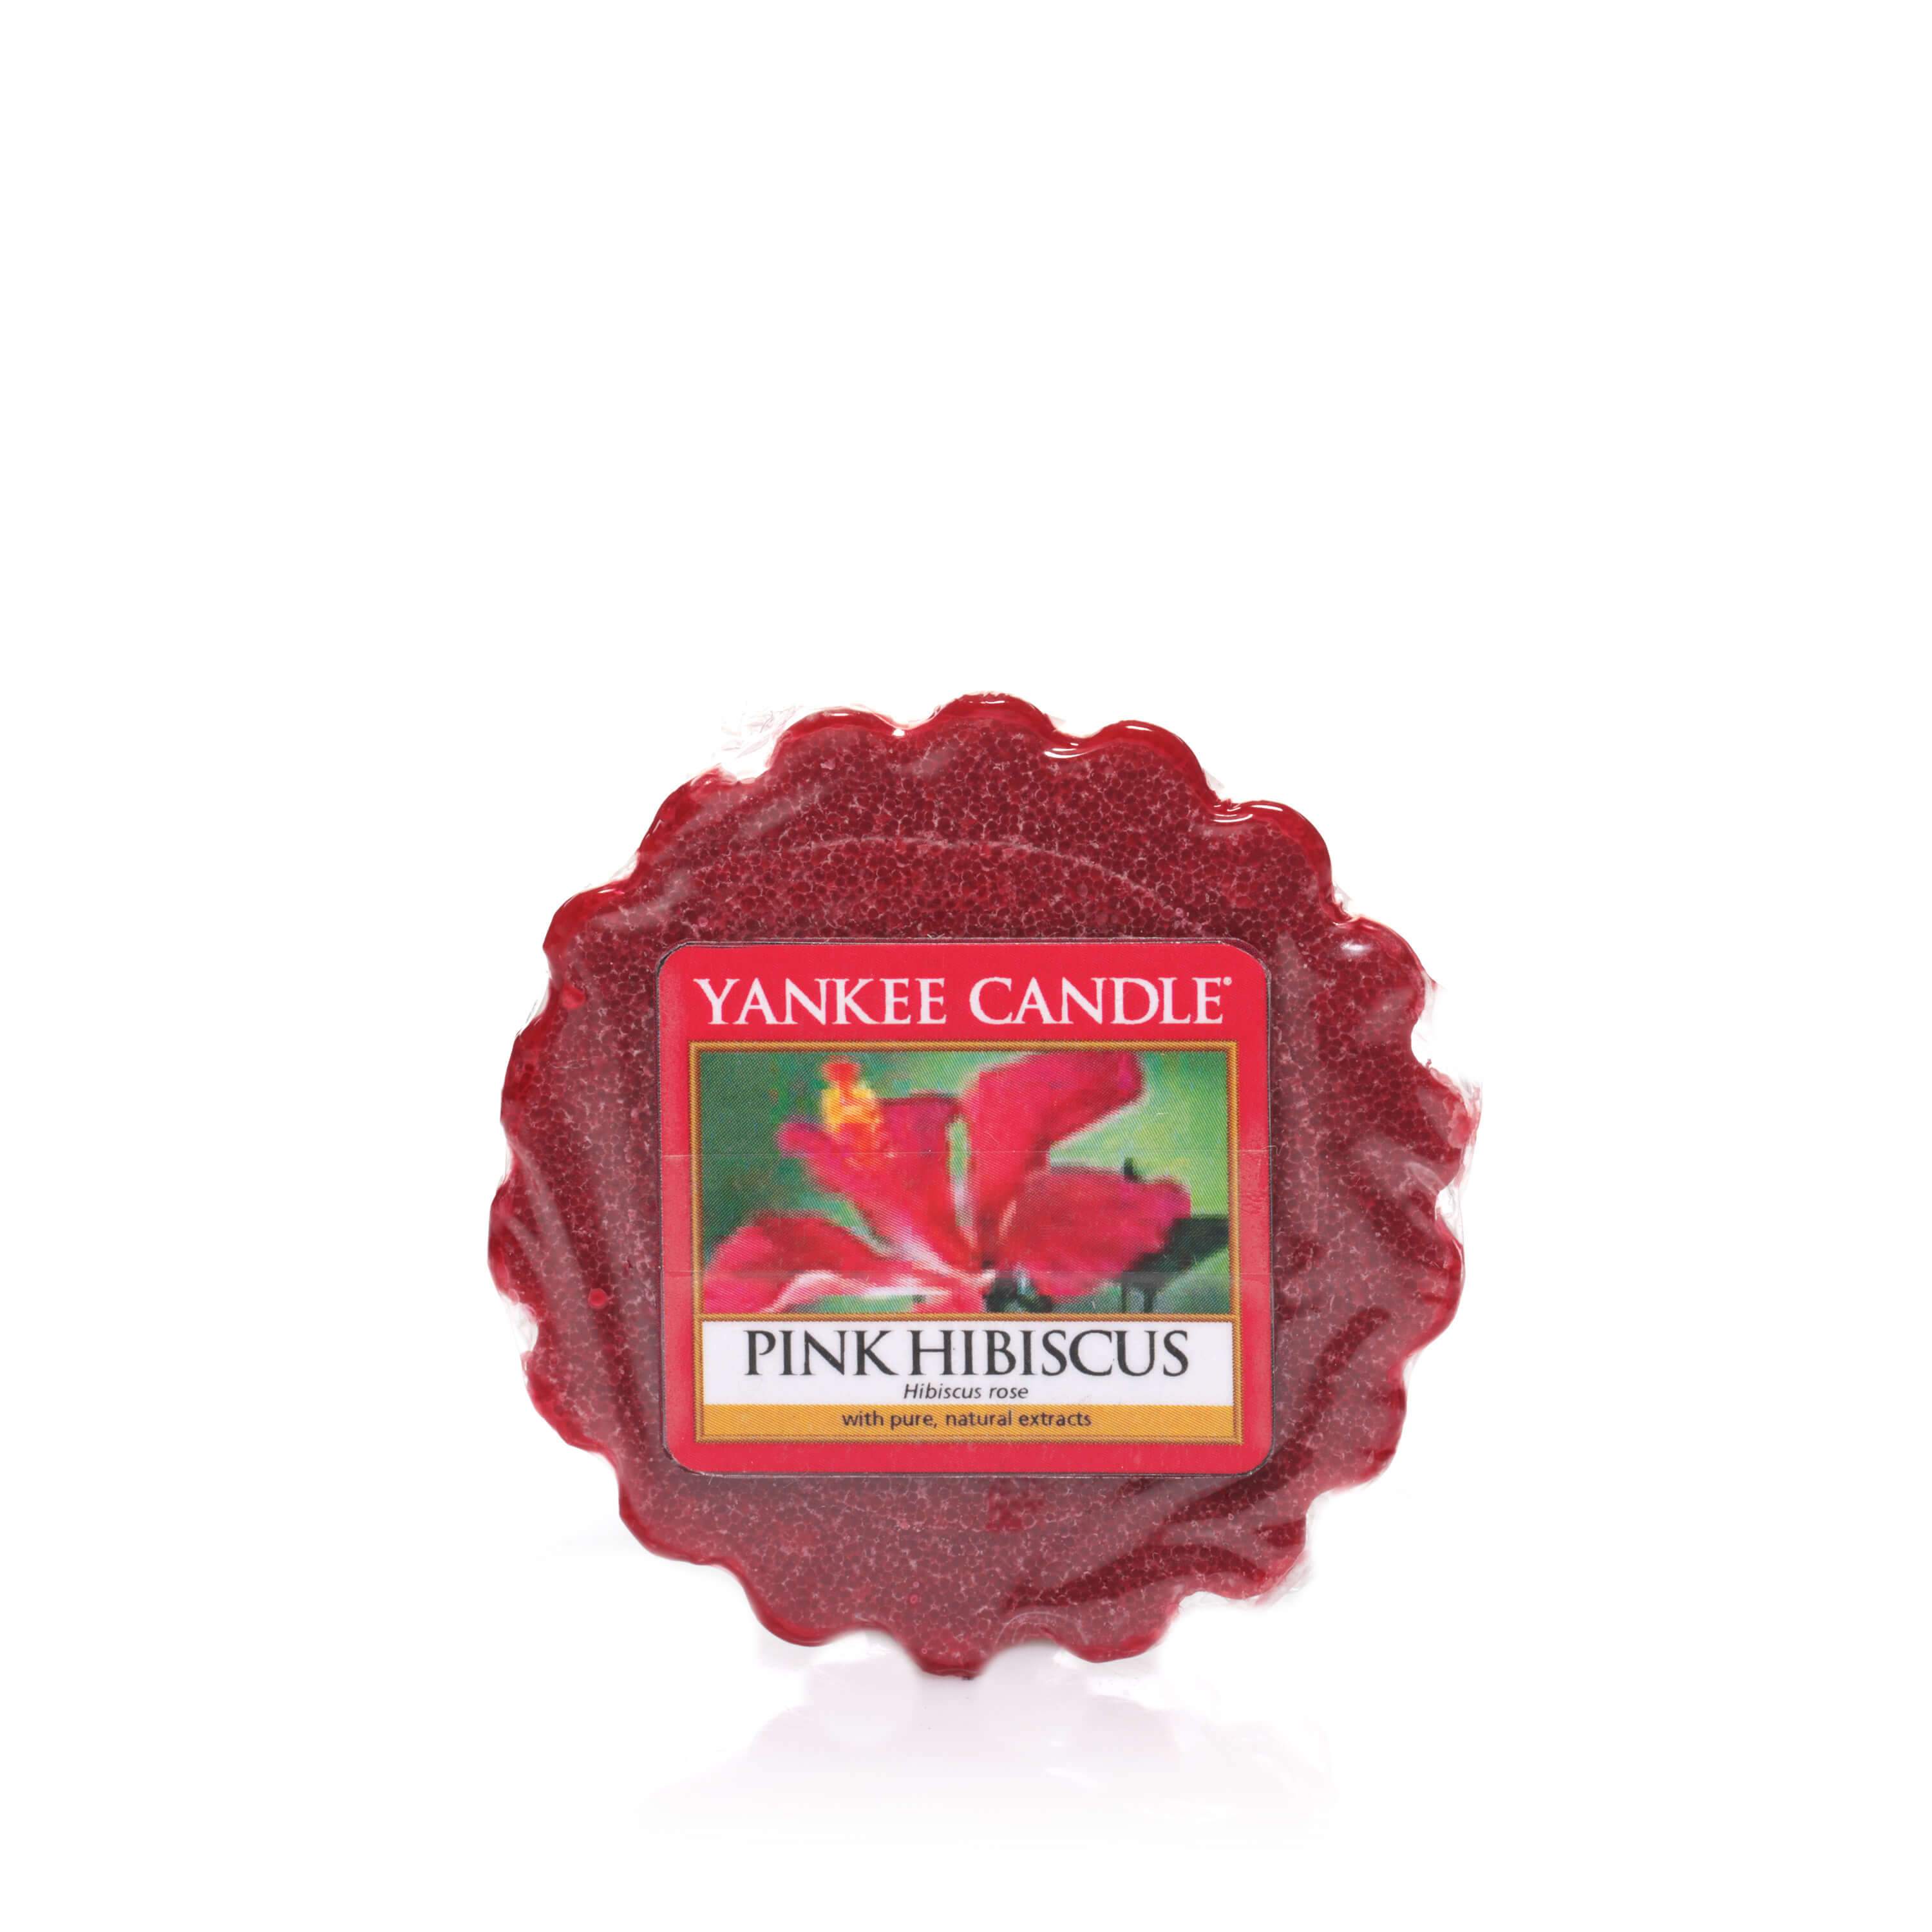 Hibiscus rose - Tartelette* Yankee Candle 